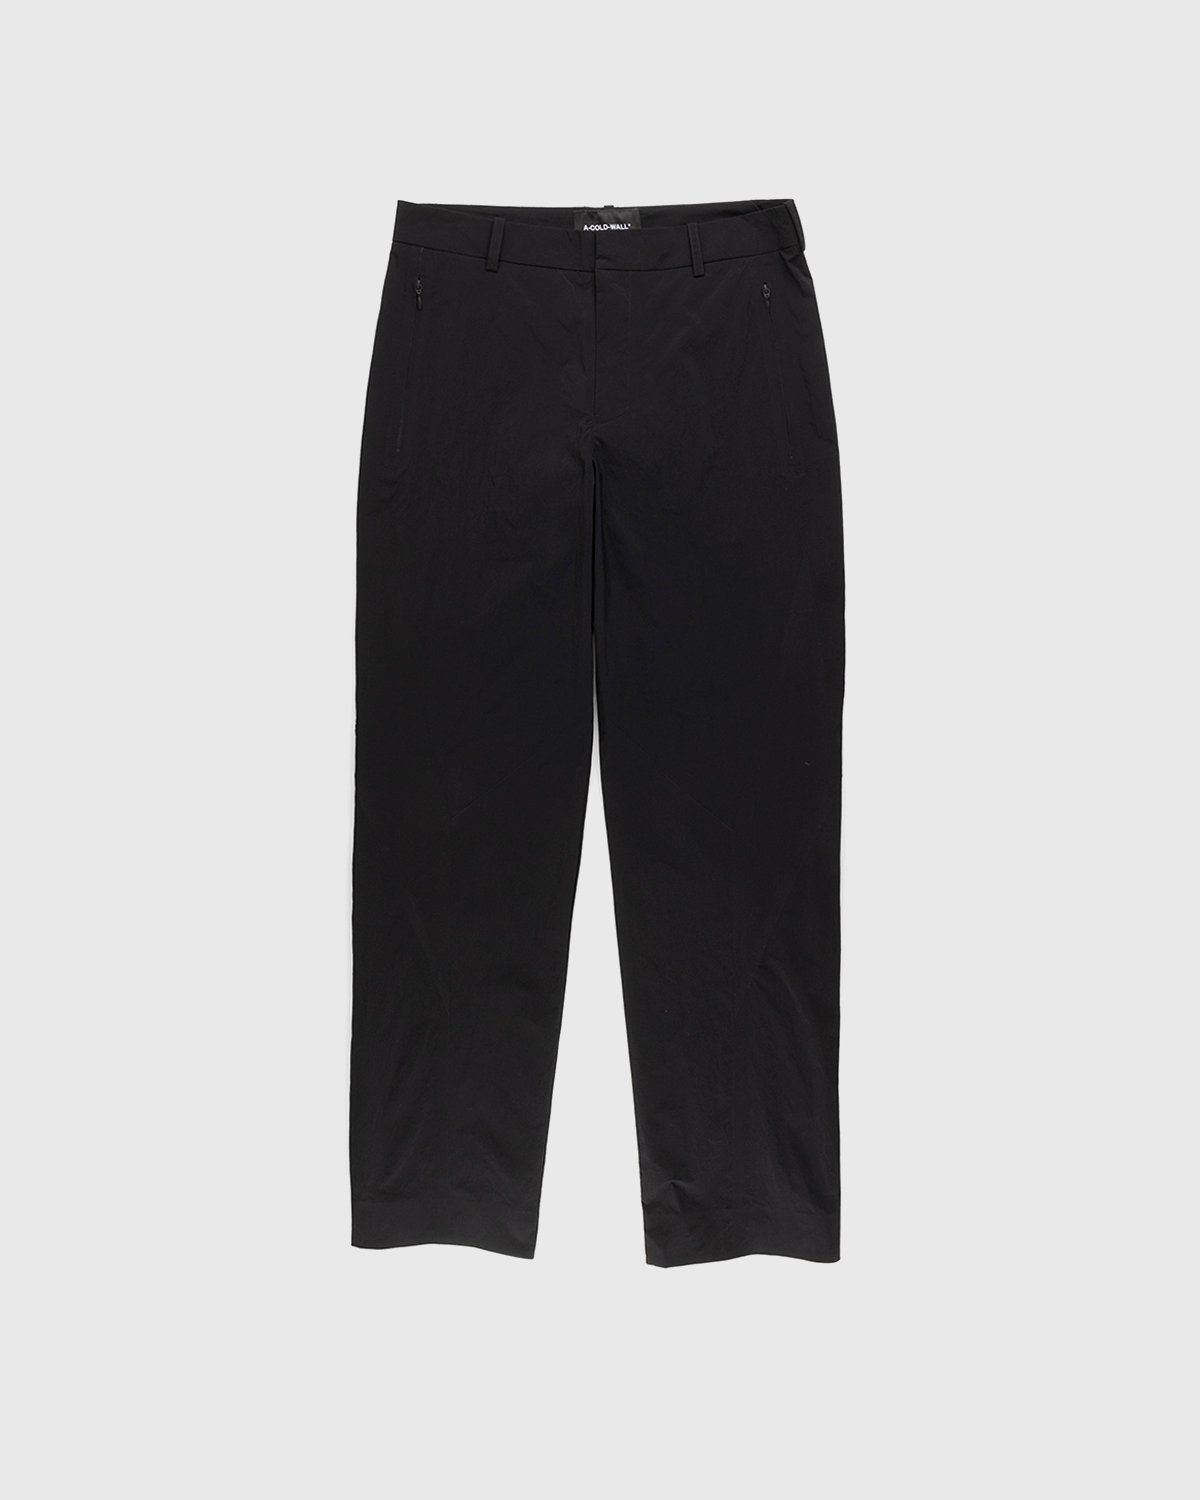 A-Cold-Wall* – Stealth Nylon Pant Black - Pants - Black - Image 1